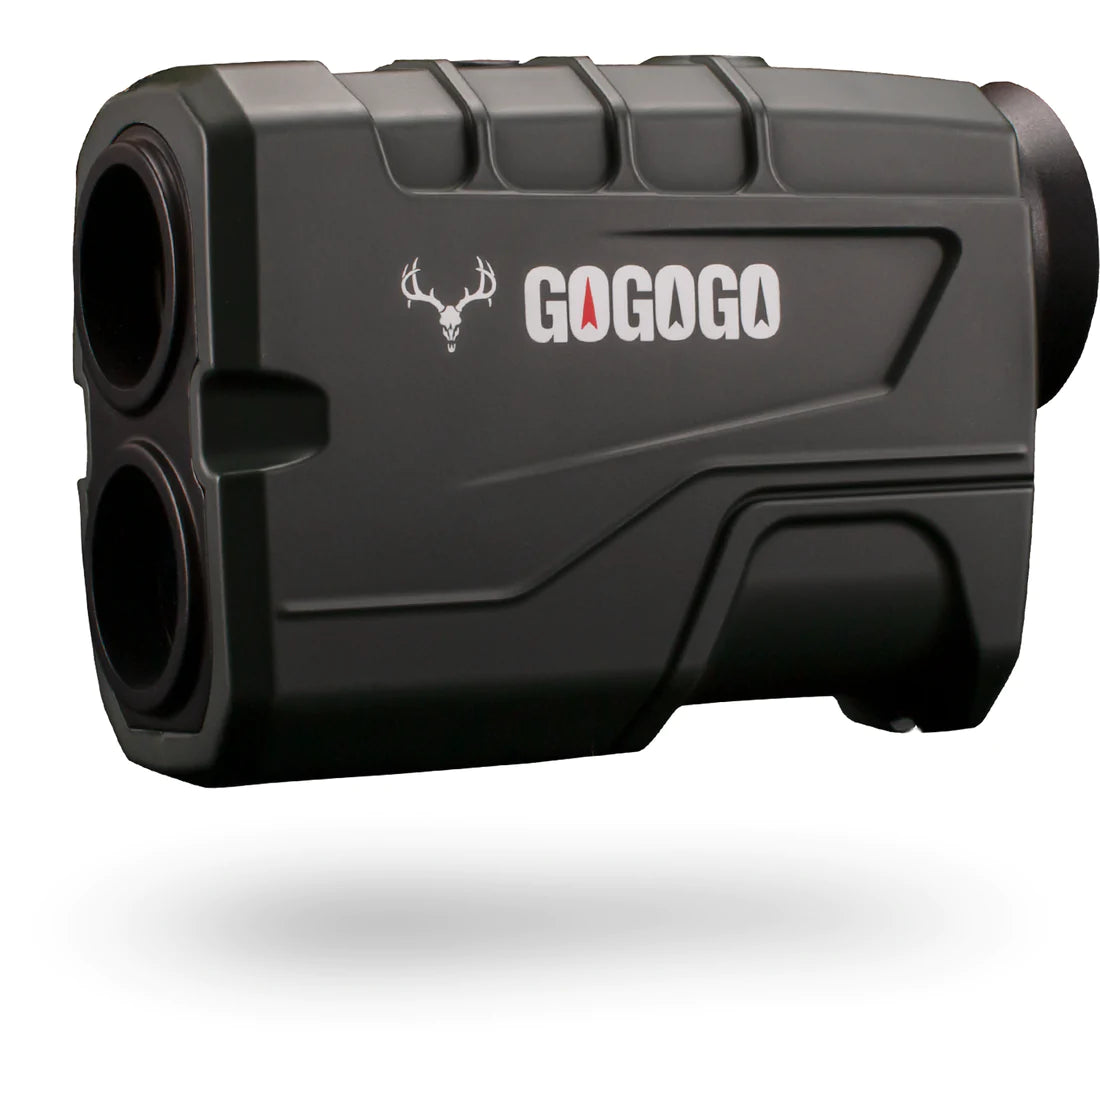 Golf & Hunting Range Finder|Gogogo Sport Vpro Slope Mode Continuous Sc